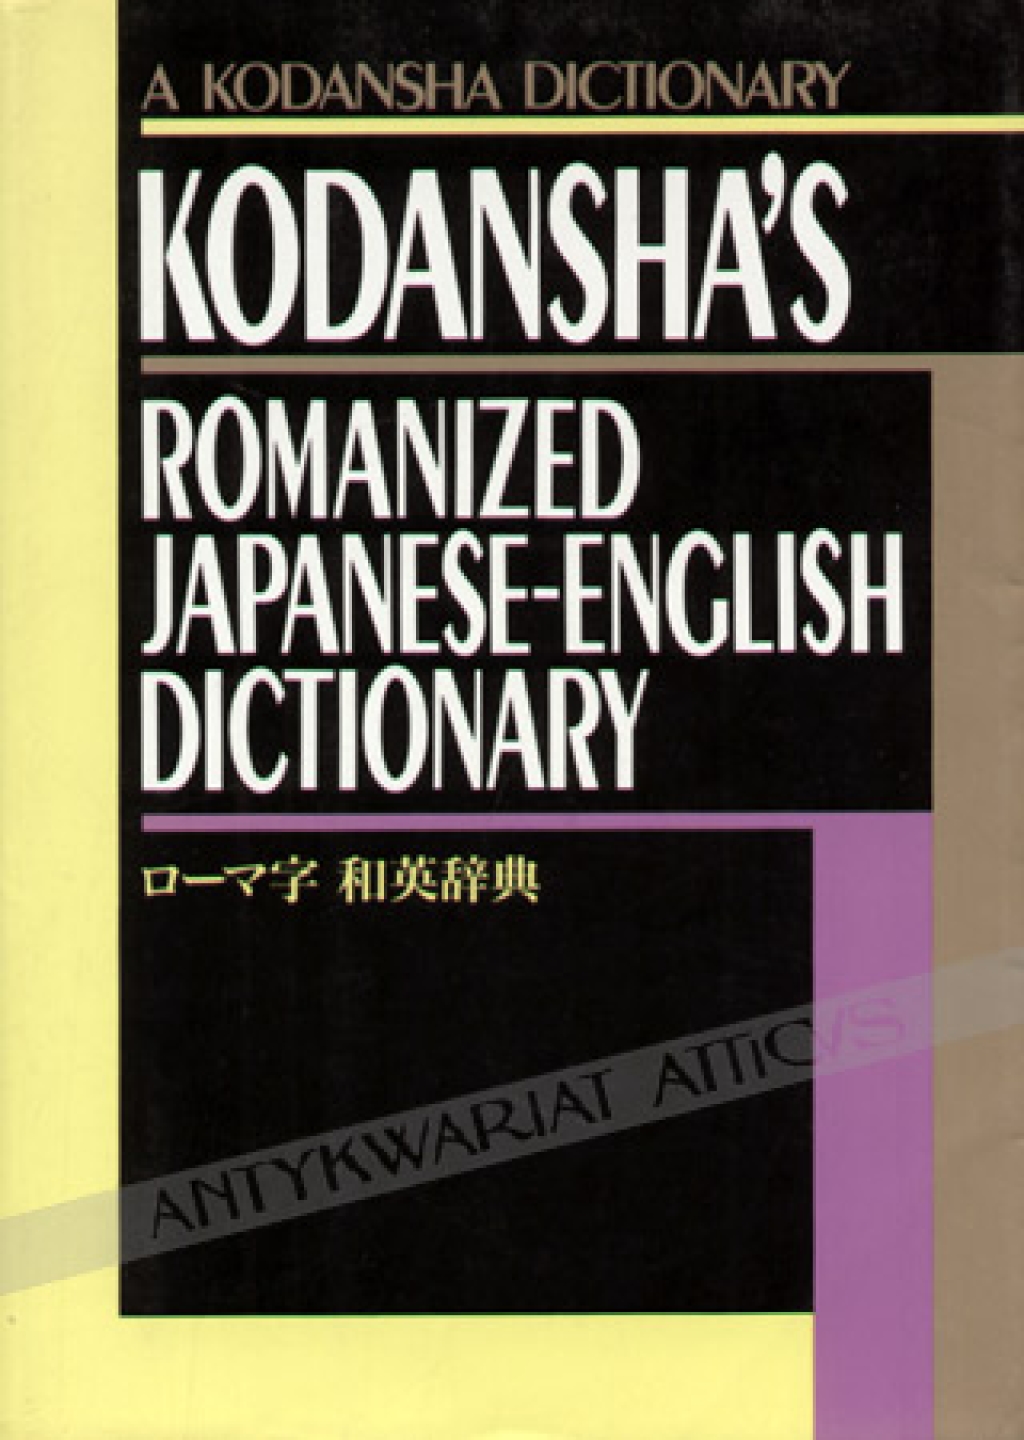 Romanized Japanese - English dictionary